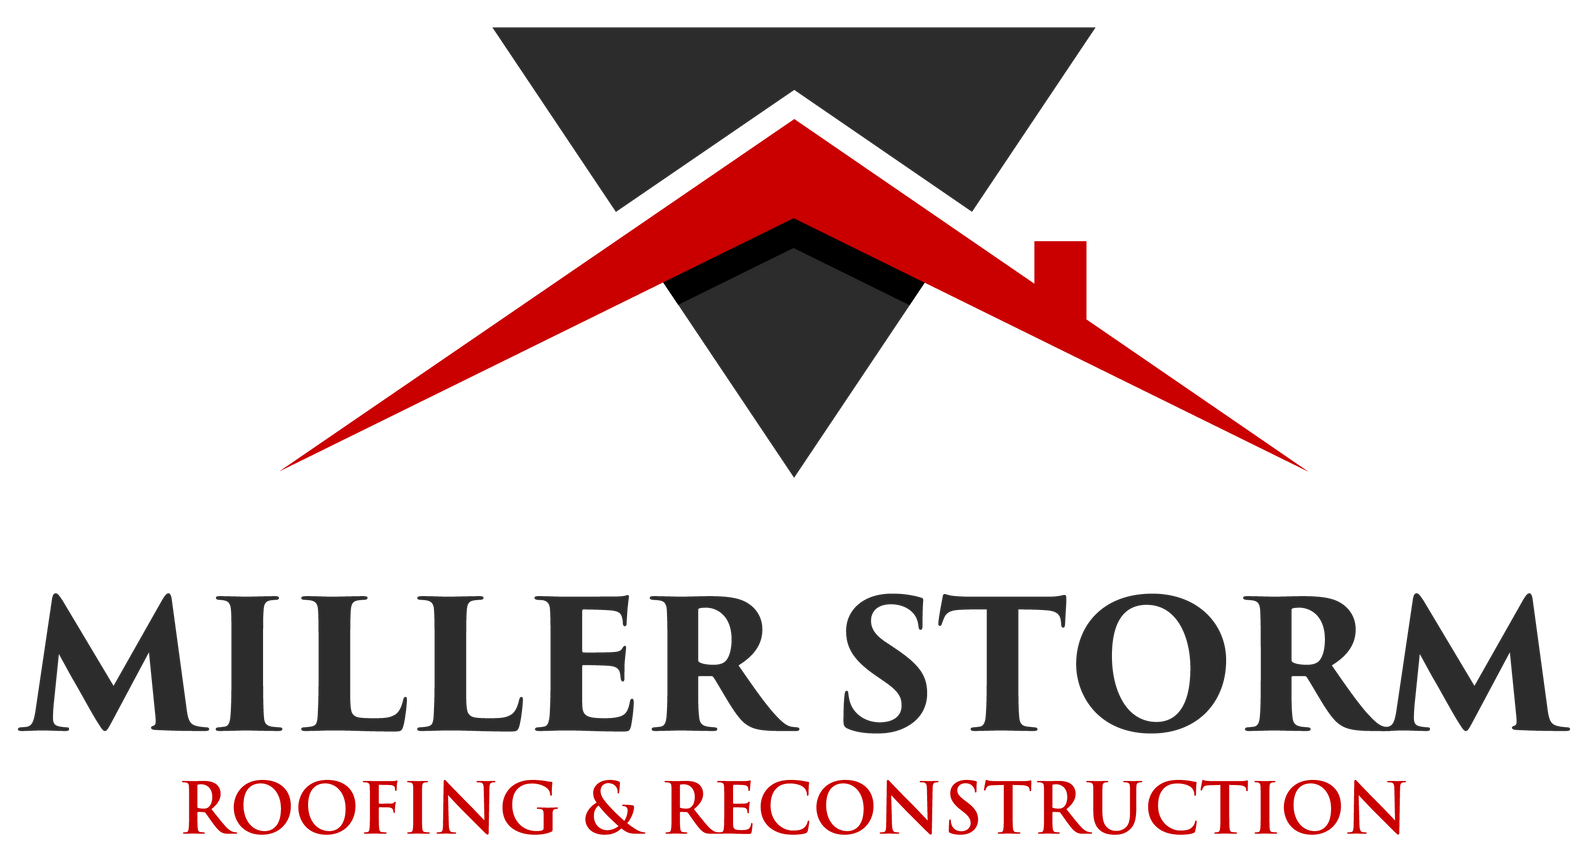 Miller Storm Roofing & Reconstruction Logo